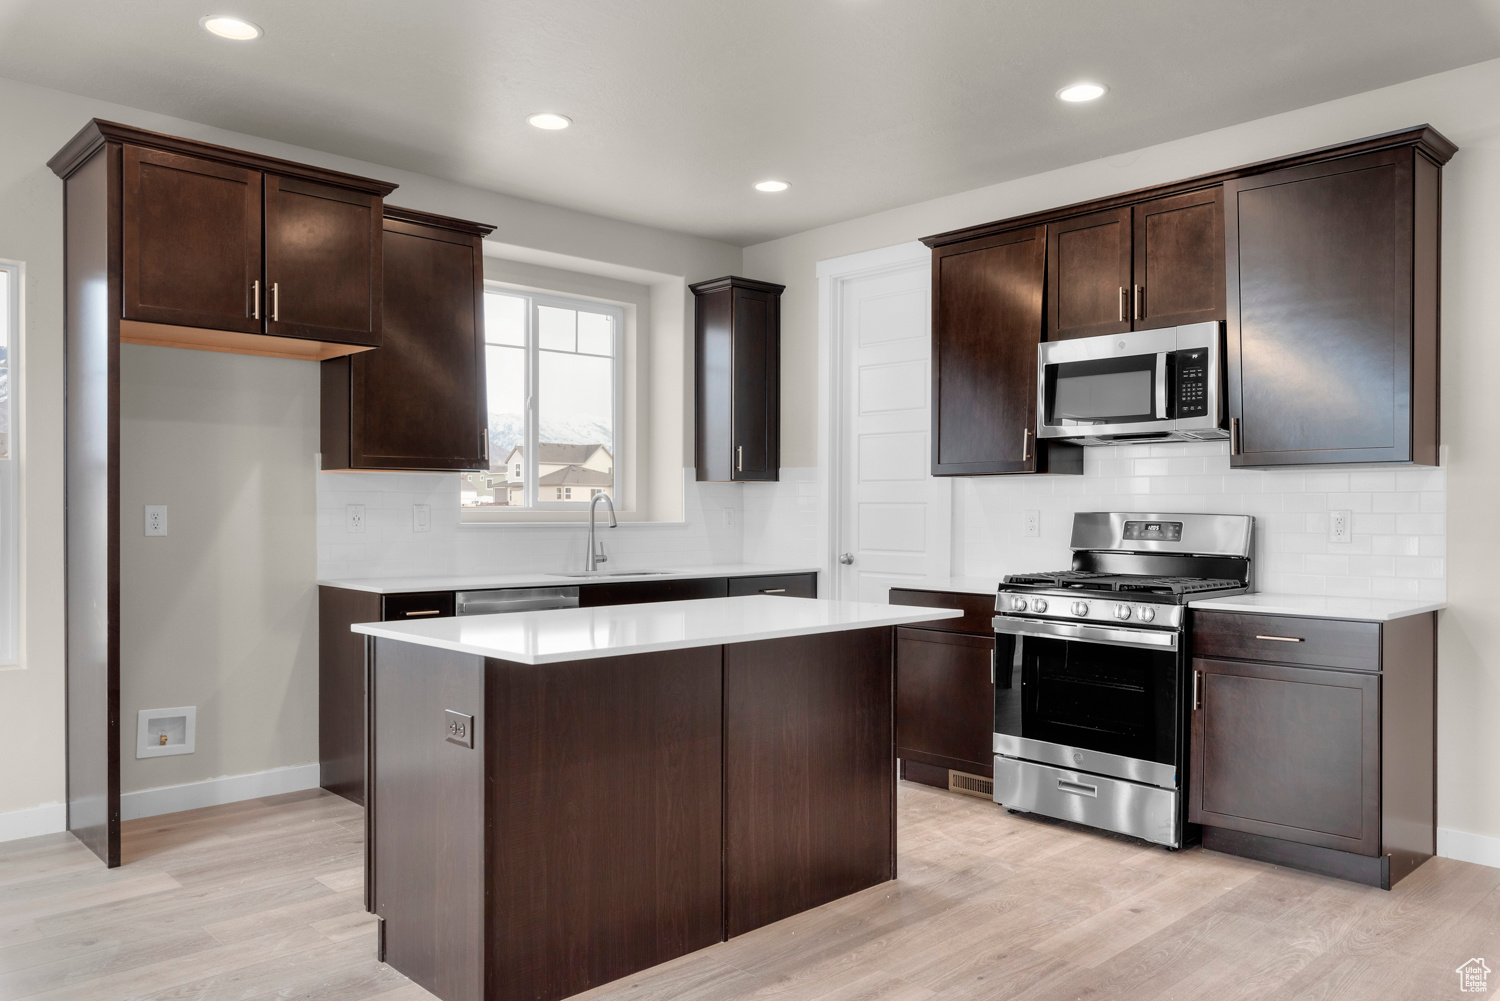 Kitchen featuring a kitchen island, light hardwood / wood-style flooring, tasteful backsplash, and stainless steel appliances